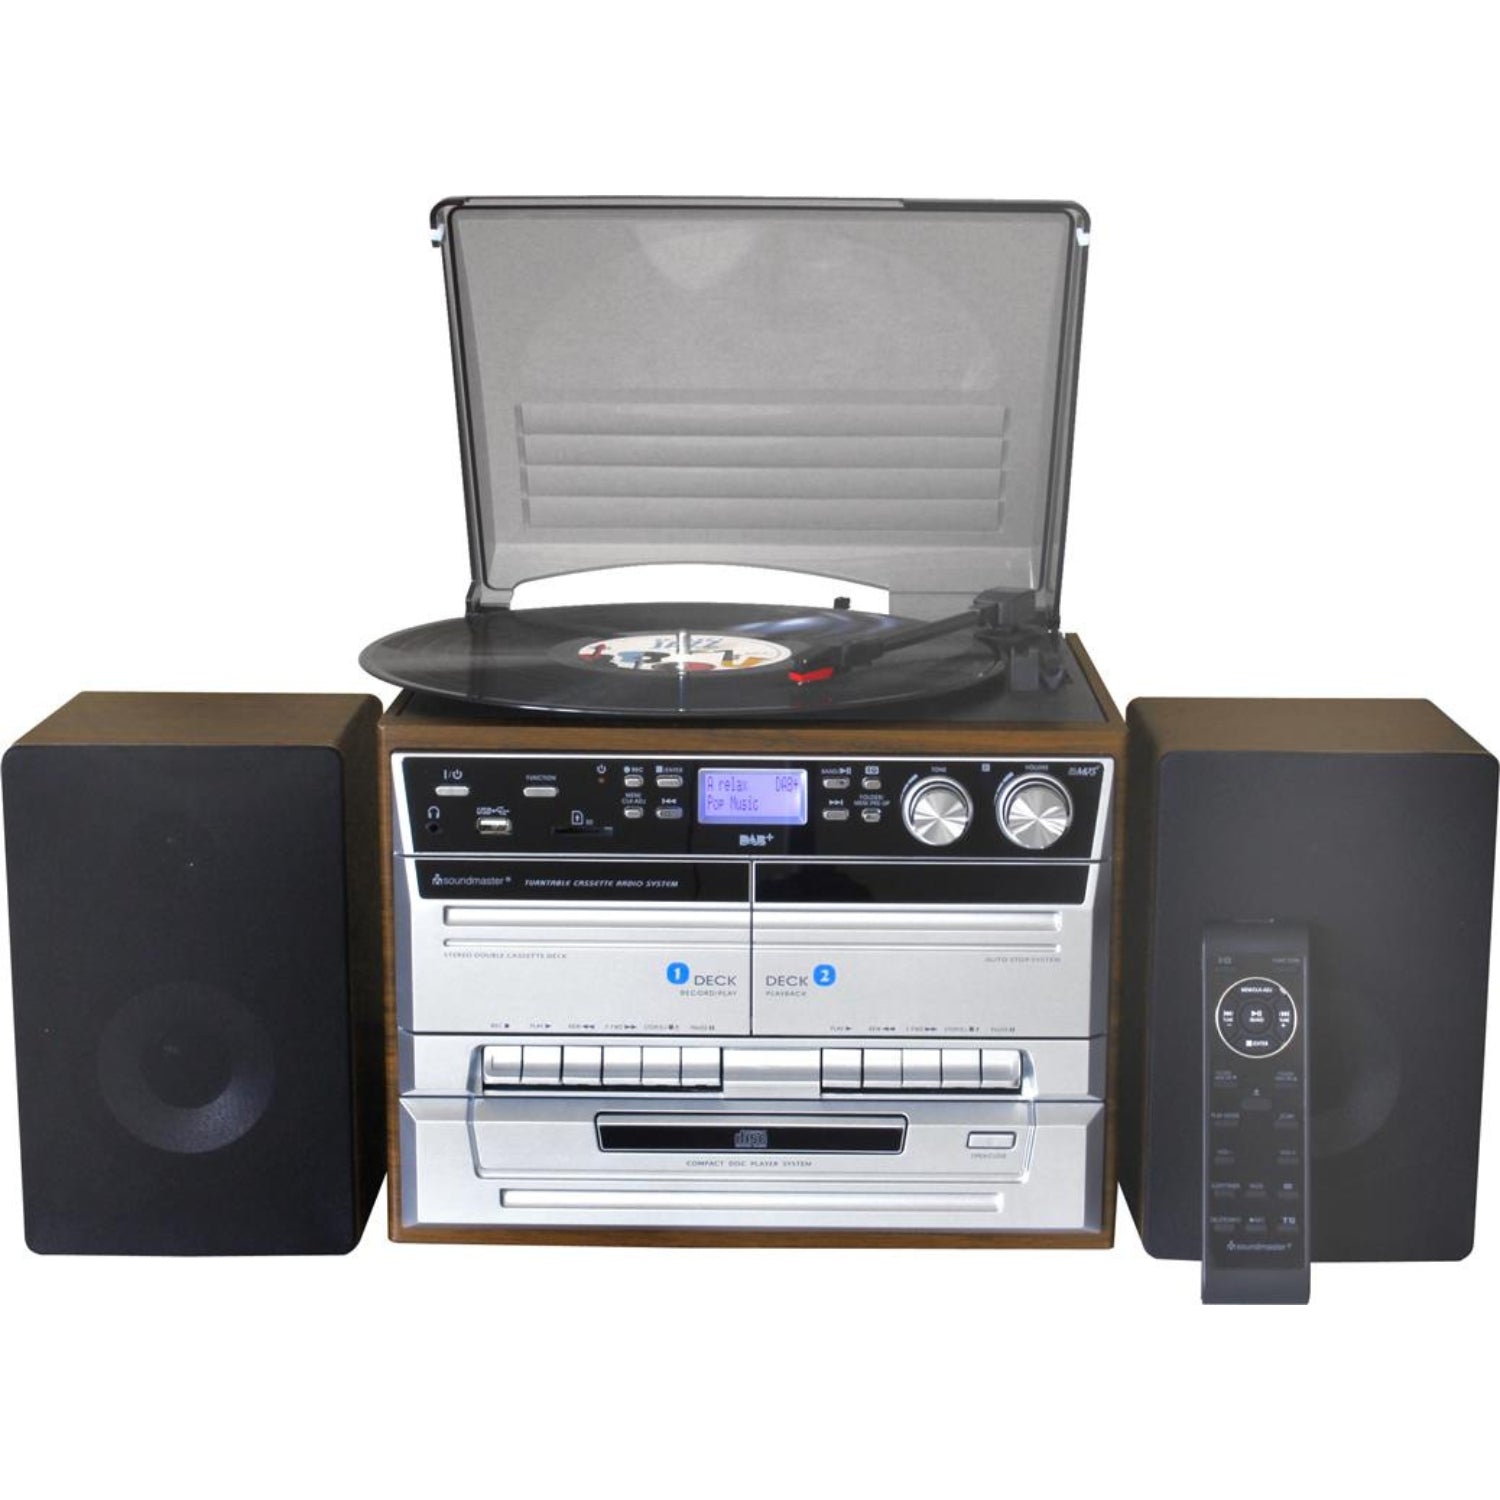 Soundmaster MCD5550DBR stereo system DAB+ double cassette Bluetooth CD MP3 turntable USB encoding digitization